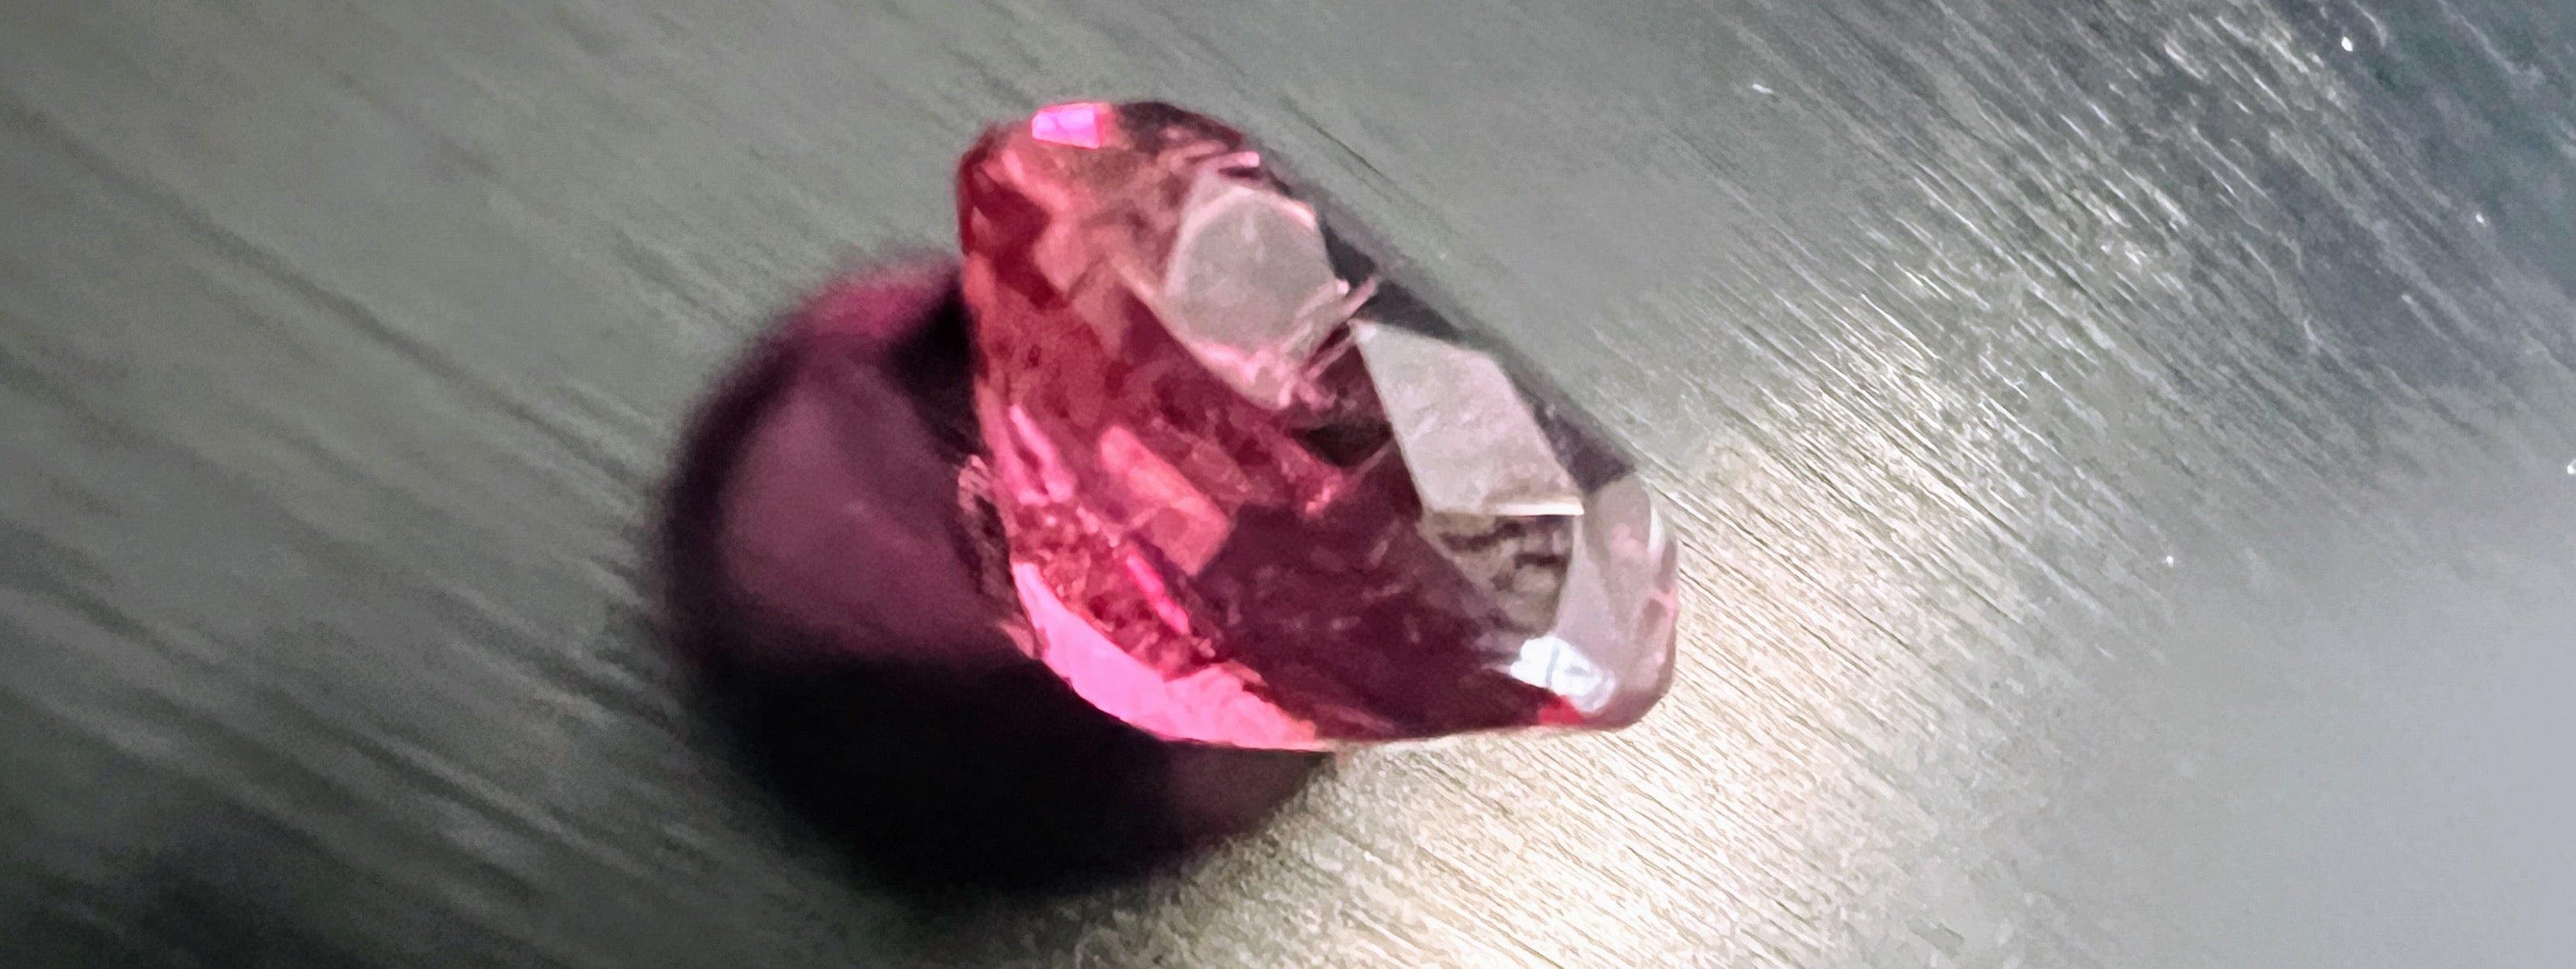 Taille ovale Pierre précieuse non sertie, tourmaline rubellite rose dramatique ovale de 9,60 carats en vente